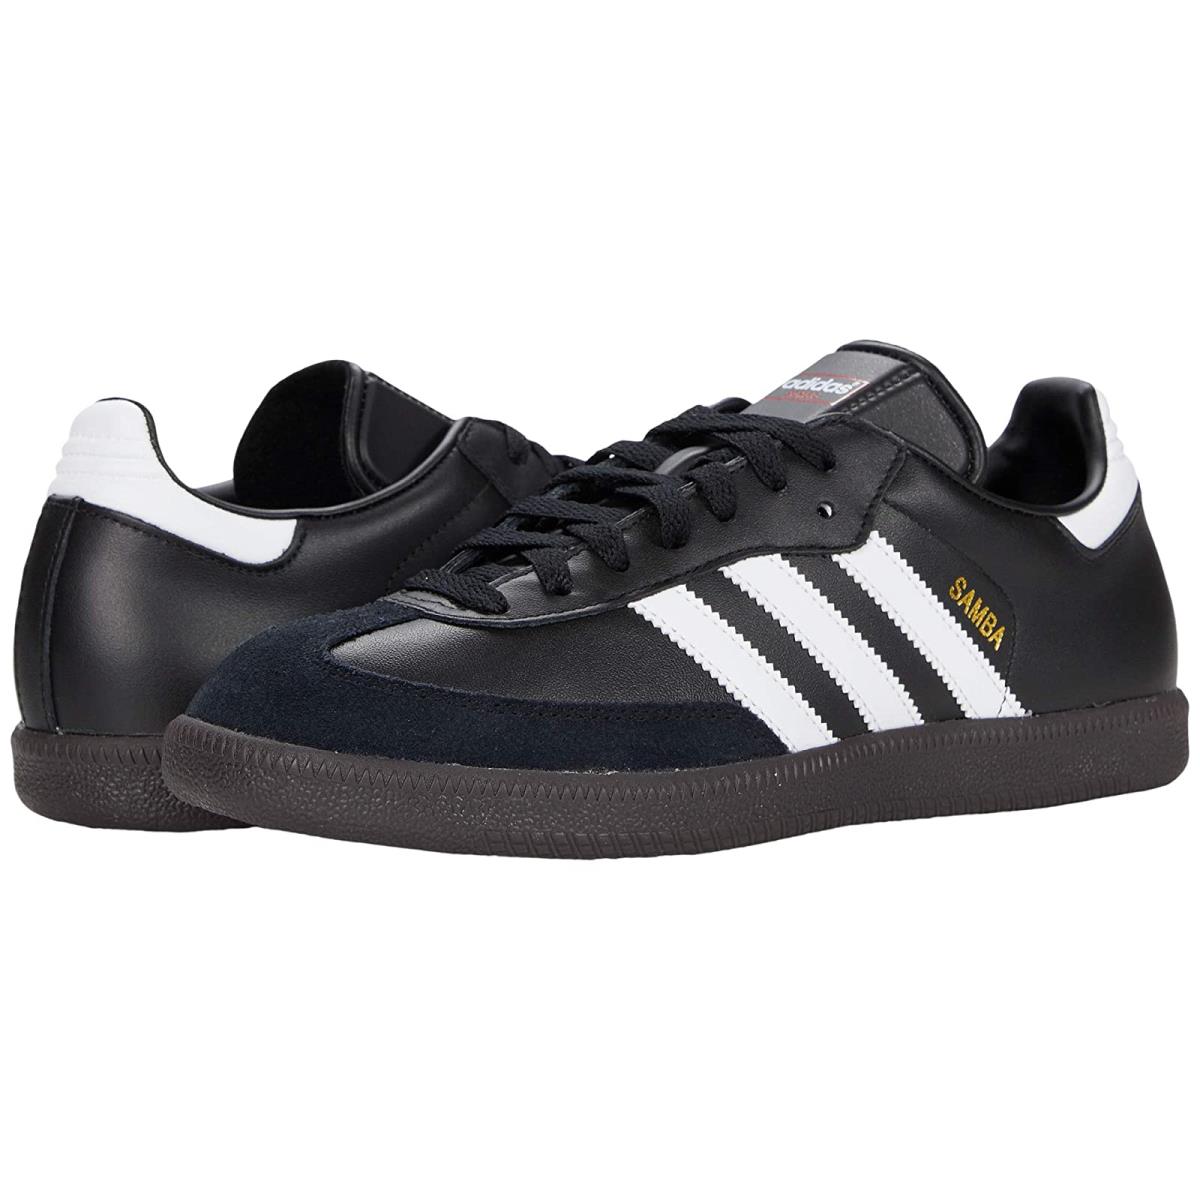 Man`s Sneakers Athletic Shoes Adidas Samba Black/White/Black